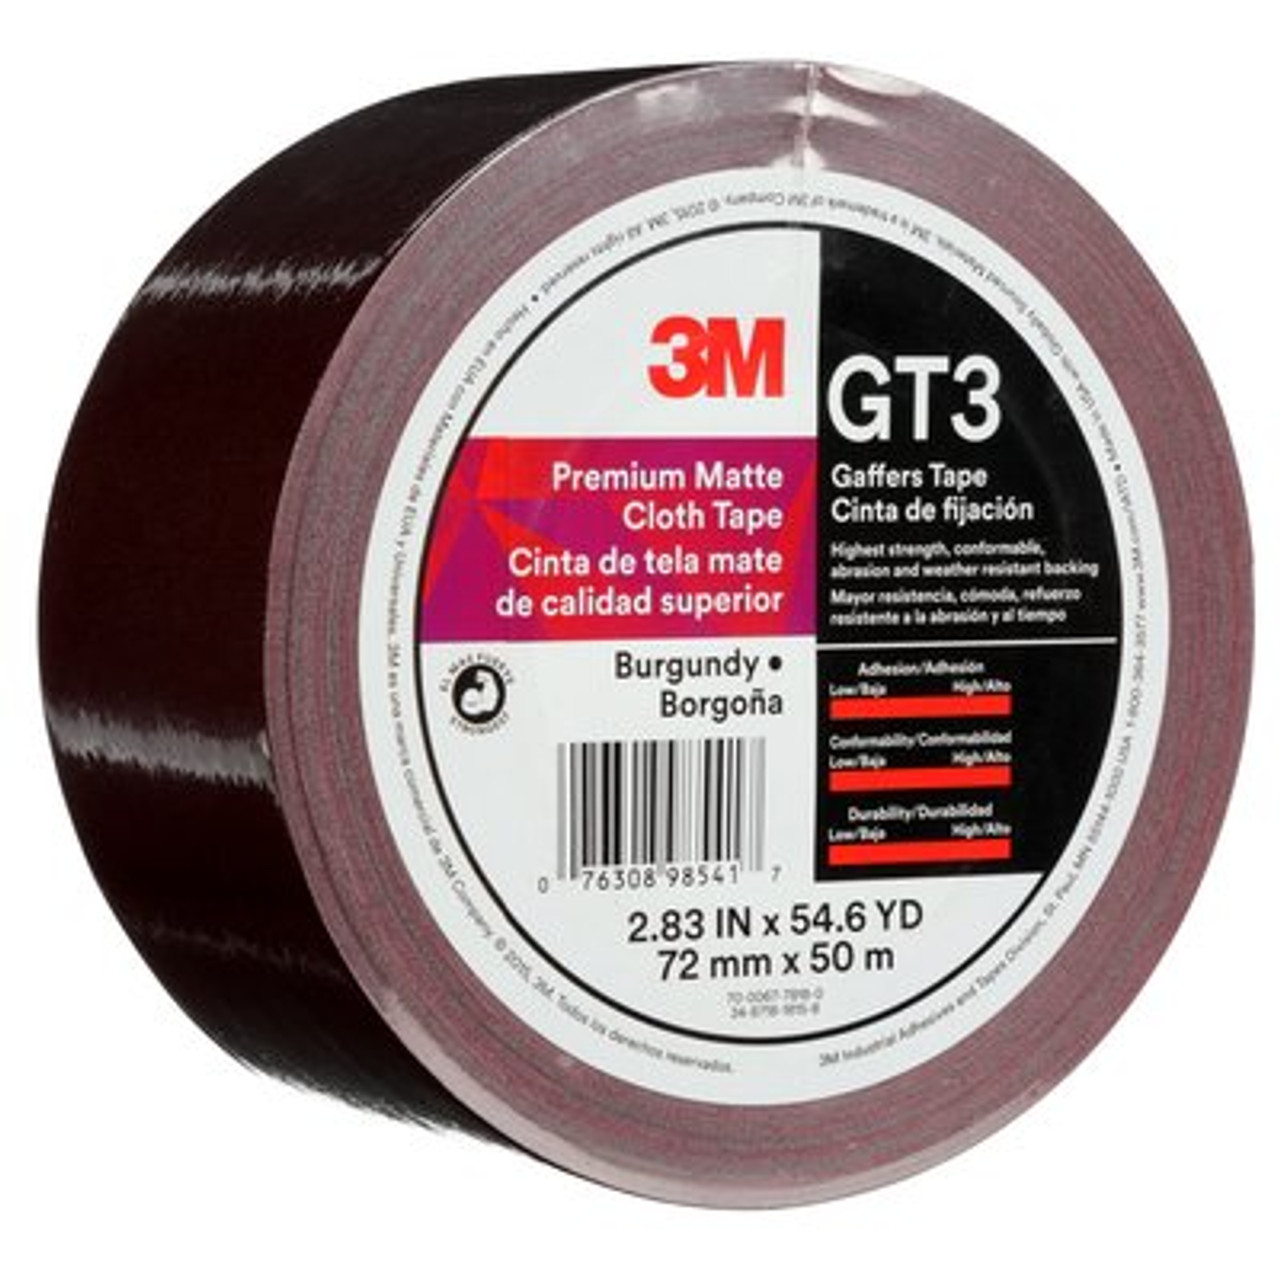 3M™ Premium Matte Cloth (Gaffers) Tape GT3, Burgundy, 72 mm x 50 m, 11 mil